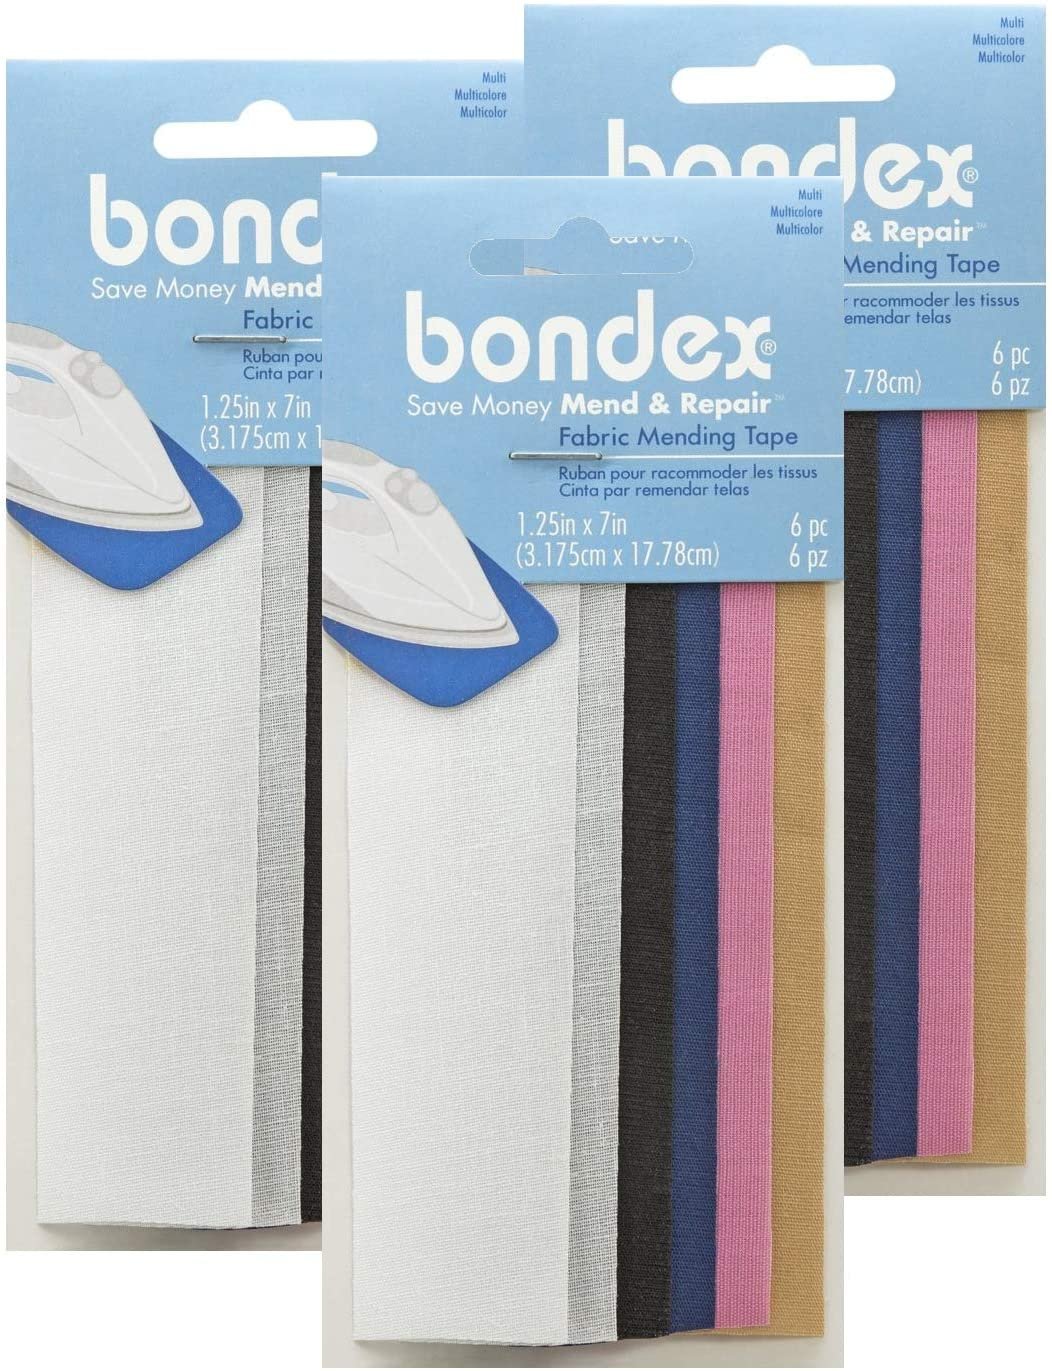 Bondex Iron-On Mending Tape 7X1-1/4 6/Pkg-Multi